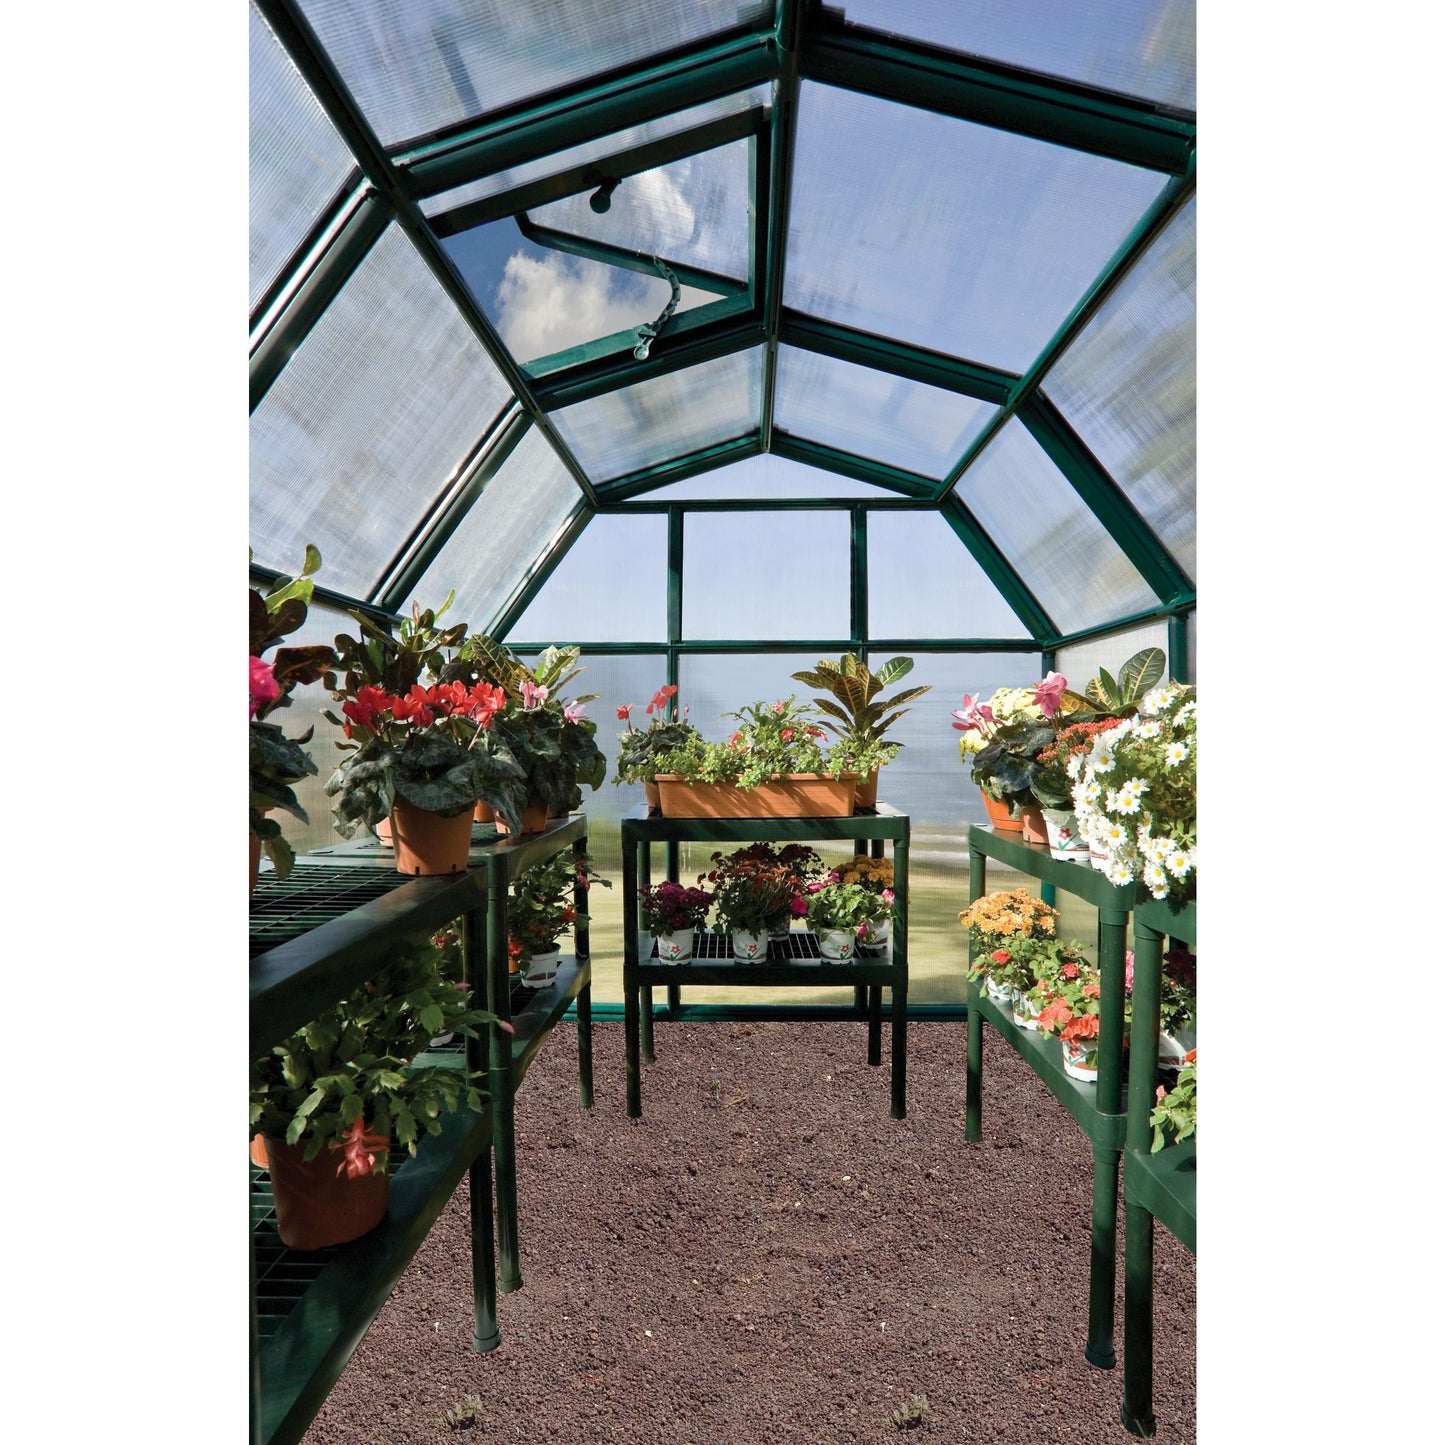 Rion EcoGrow 6' x 12' Greenhouse